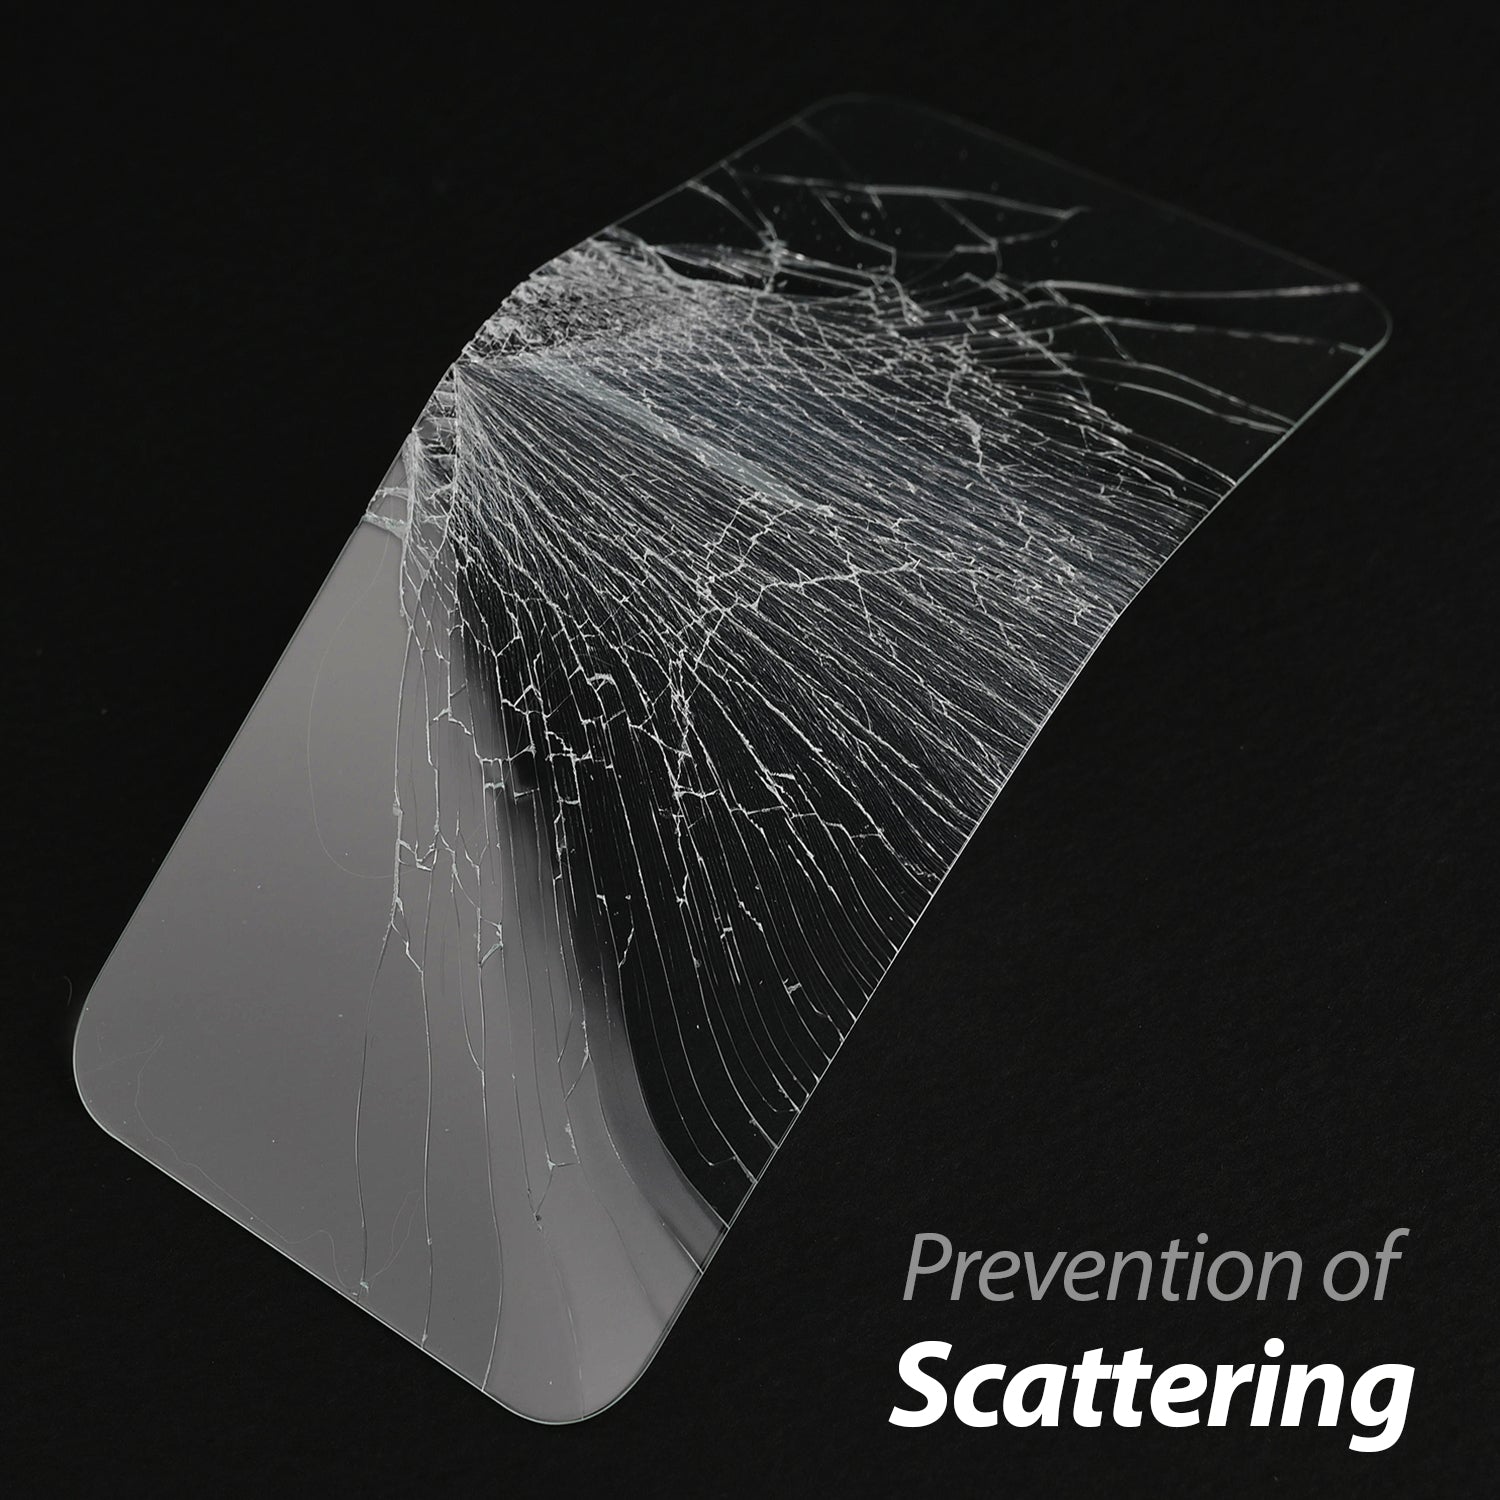 EZ] iPhone 14 Pro EZ Glass Screen Protector (6.1) - 3 Pack – Whitestonedome